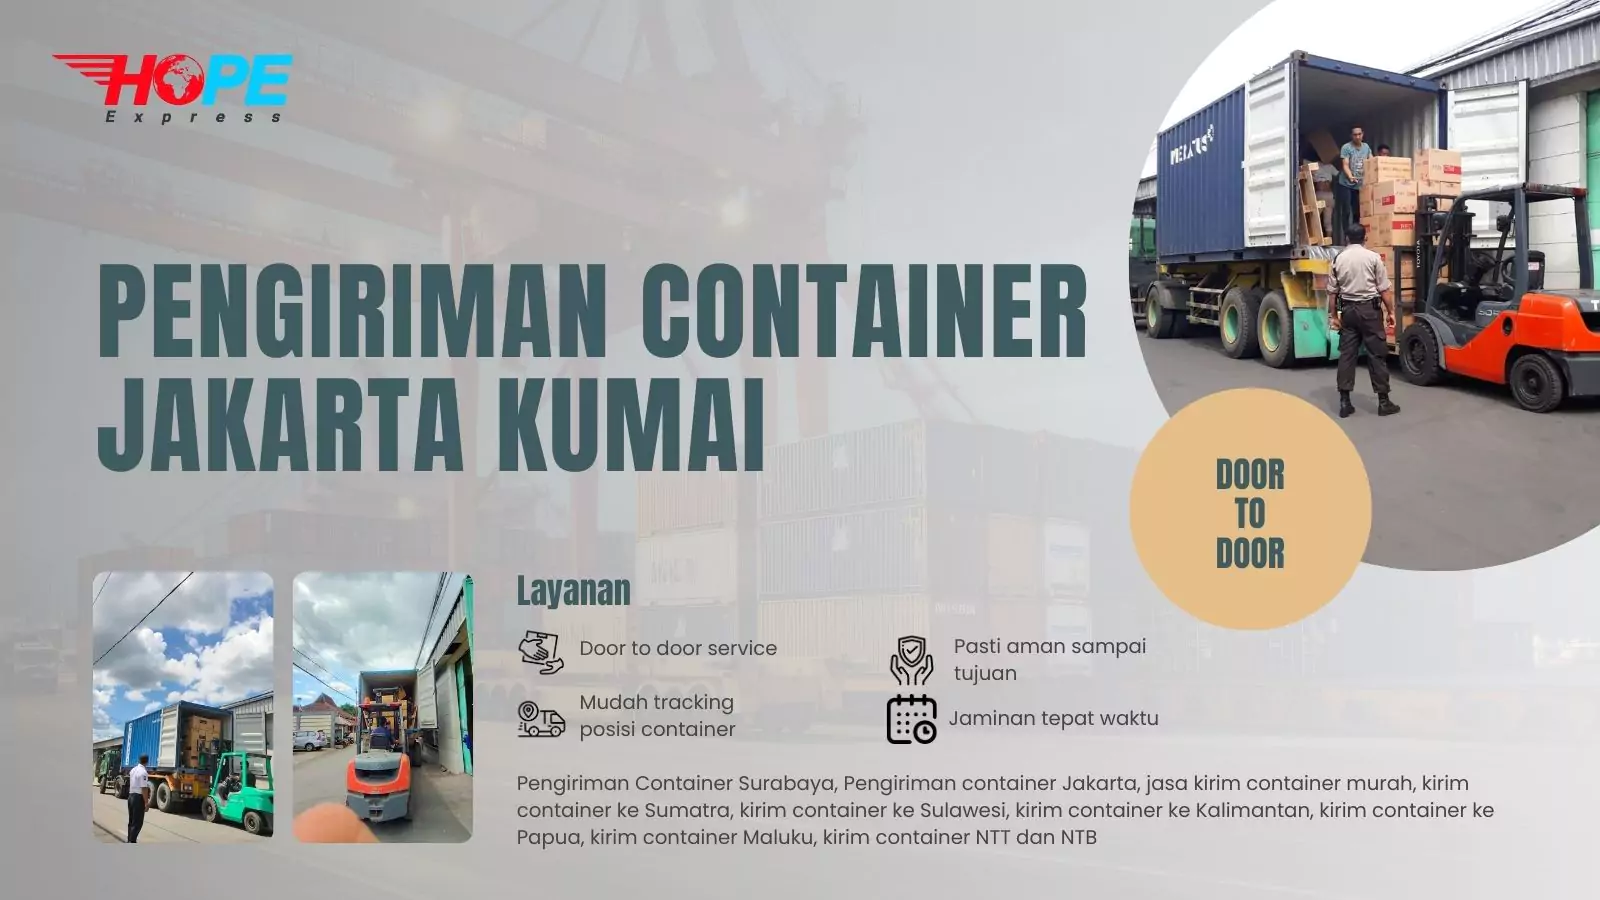 Pengiriman Container Jakarta Kumai